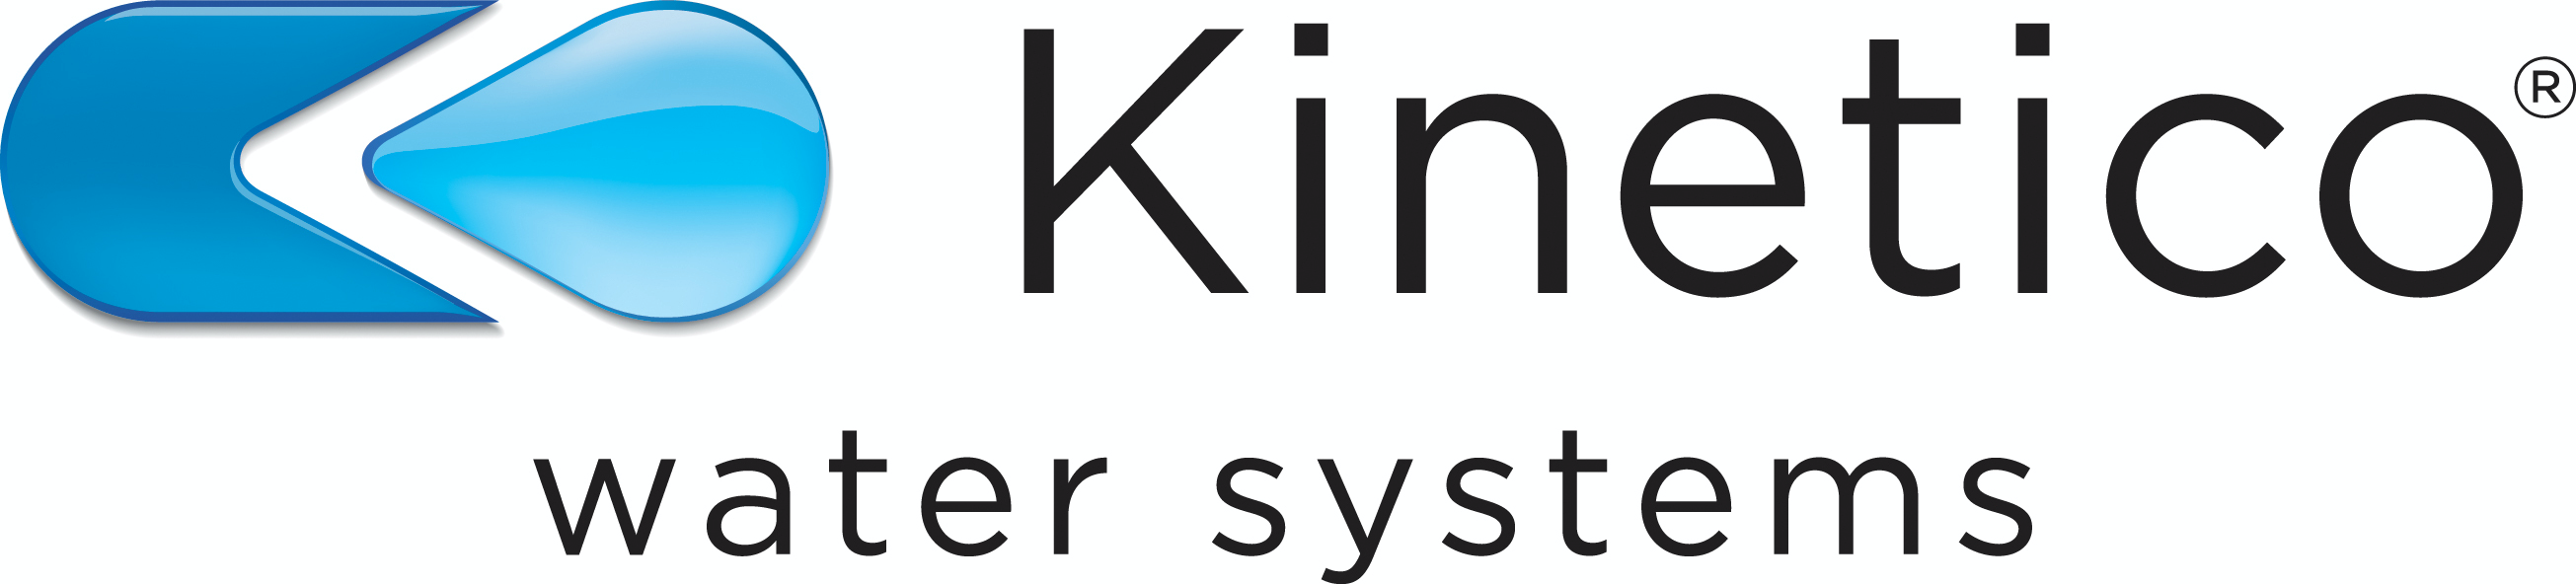 Kinetico San Antonio Water Systems logo with color